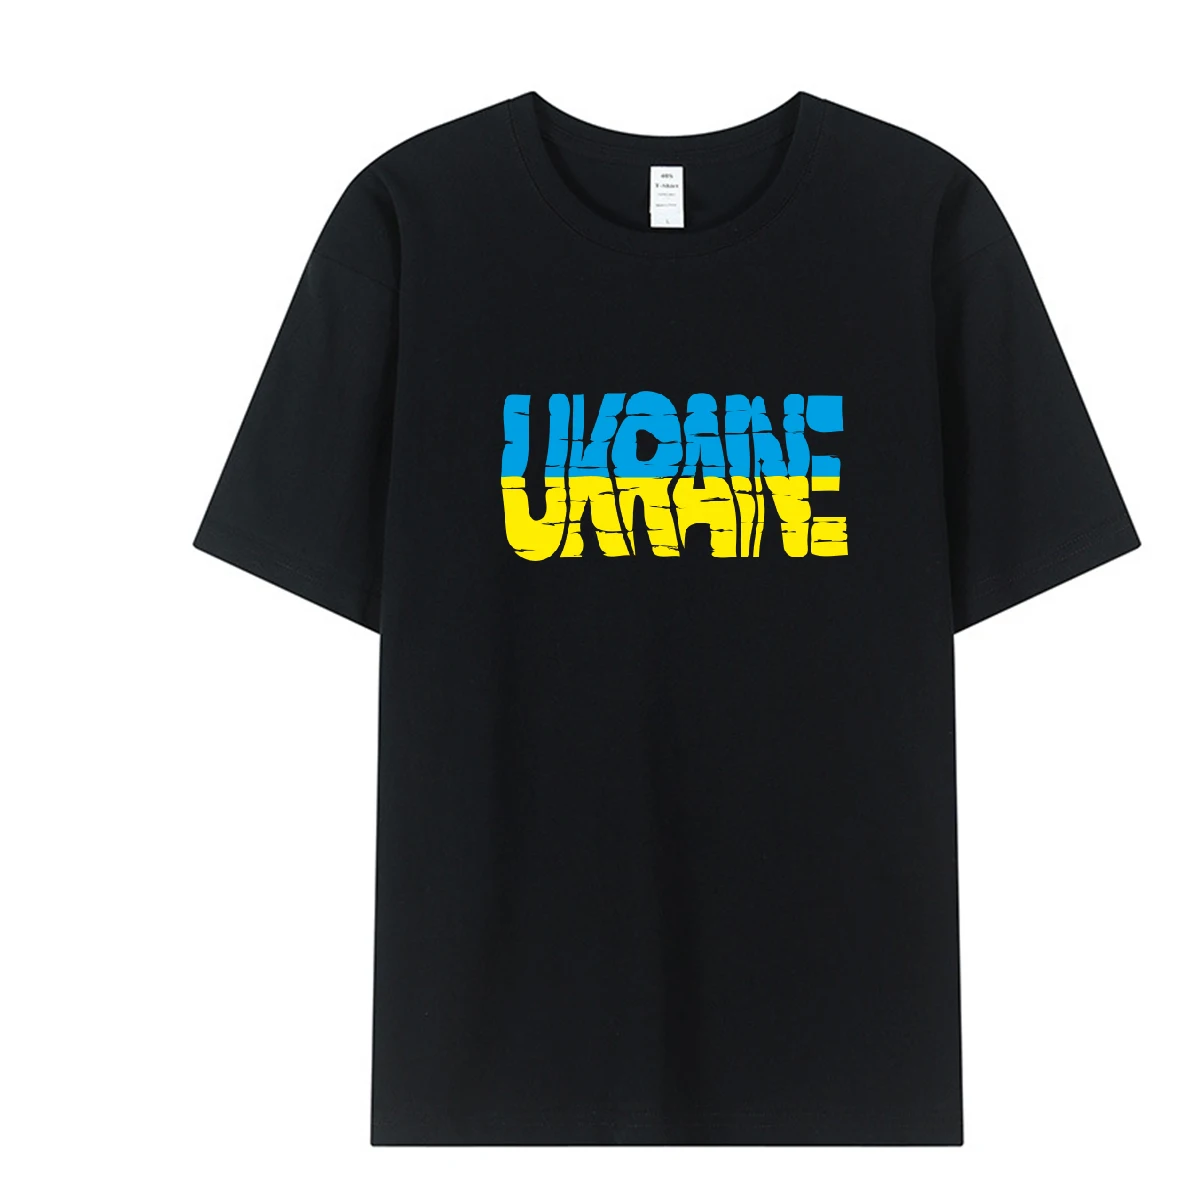 

Футболка унисекс Yes We Are Украина, базовая цветная мужская летняя футболка из 100% хлопка, большая Повседневная мужская футболка с круглым выре...